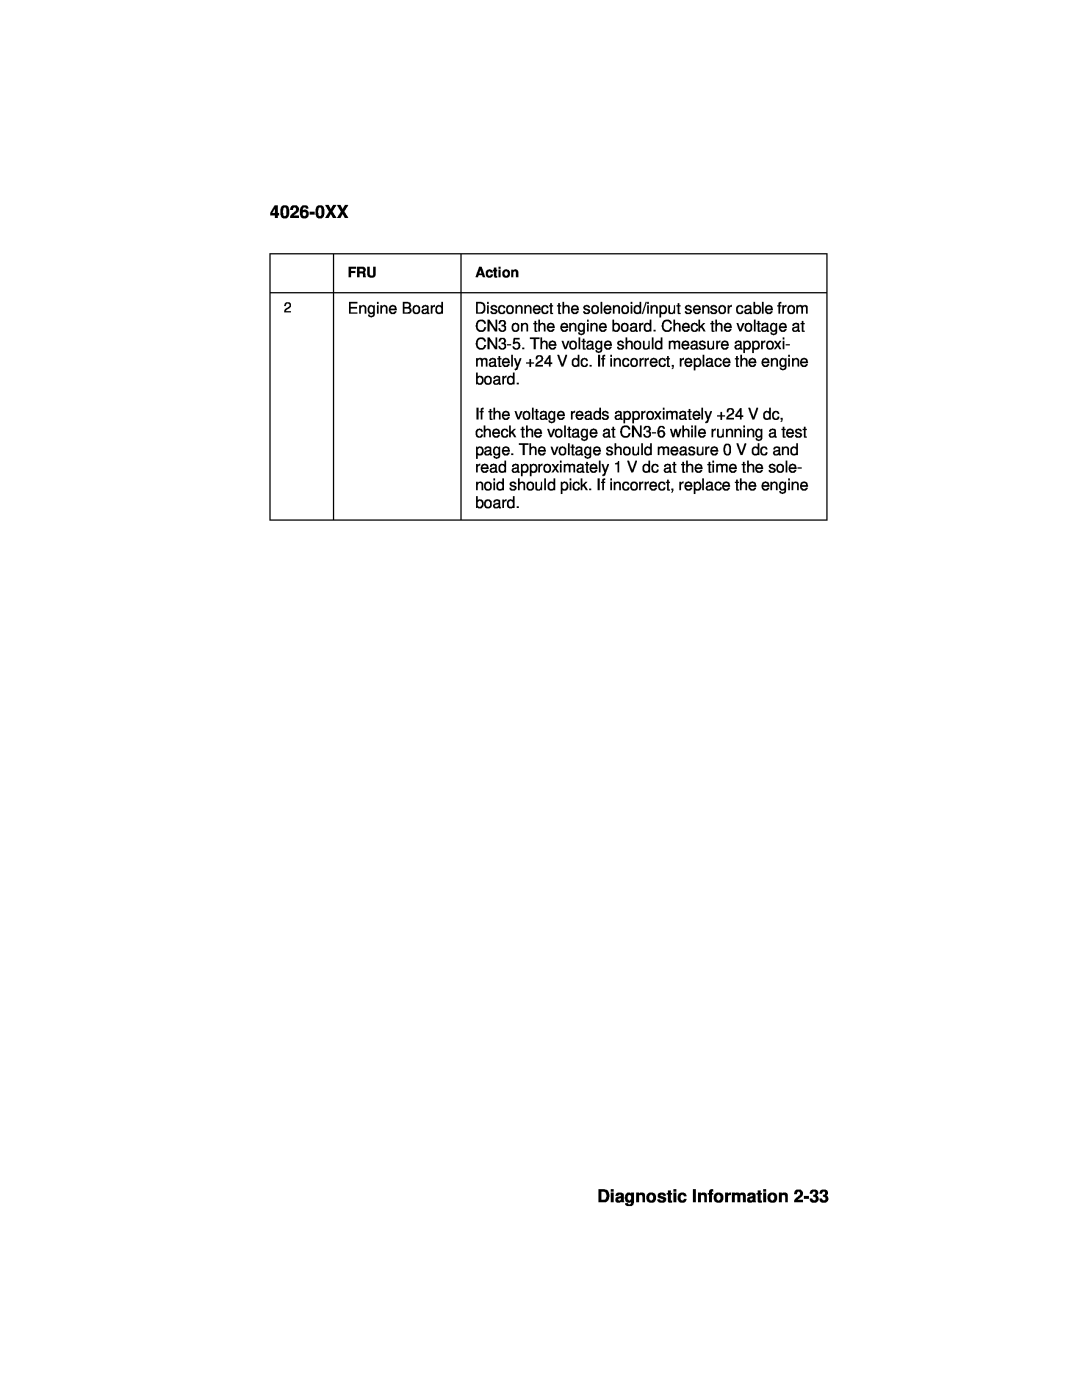 Lexmark 4026-0XX manual Diagnostic Information, Engine Board 